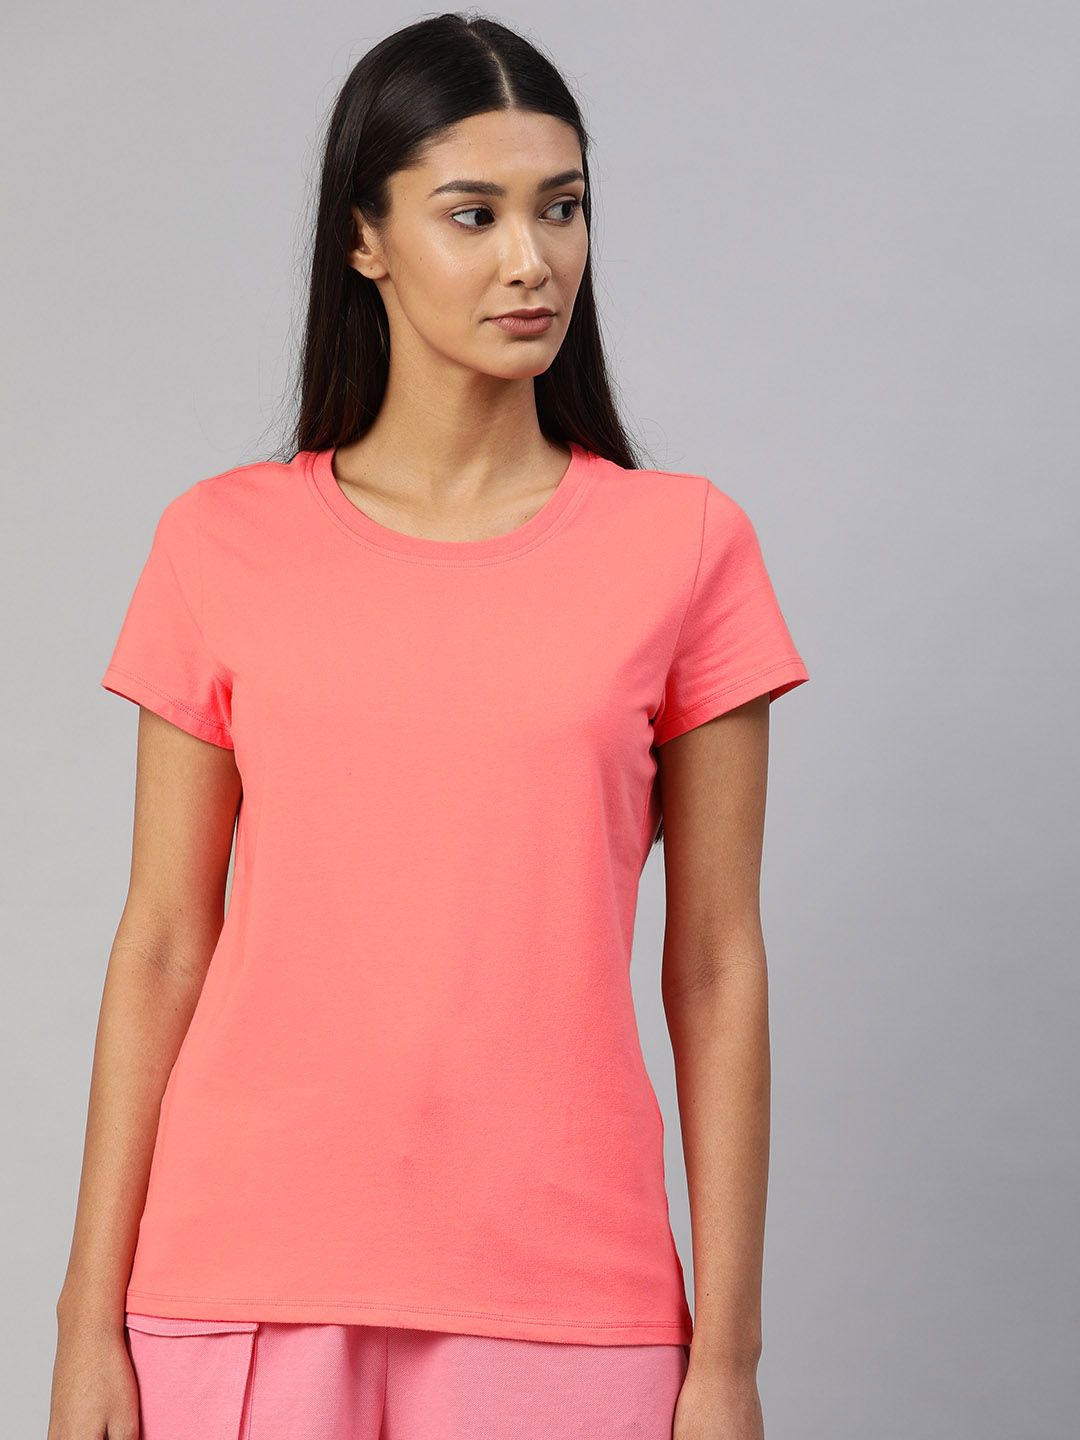 Van Heusen Women Pink Solid Round Neck Lounge T-Shirt Price in India